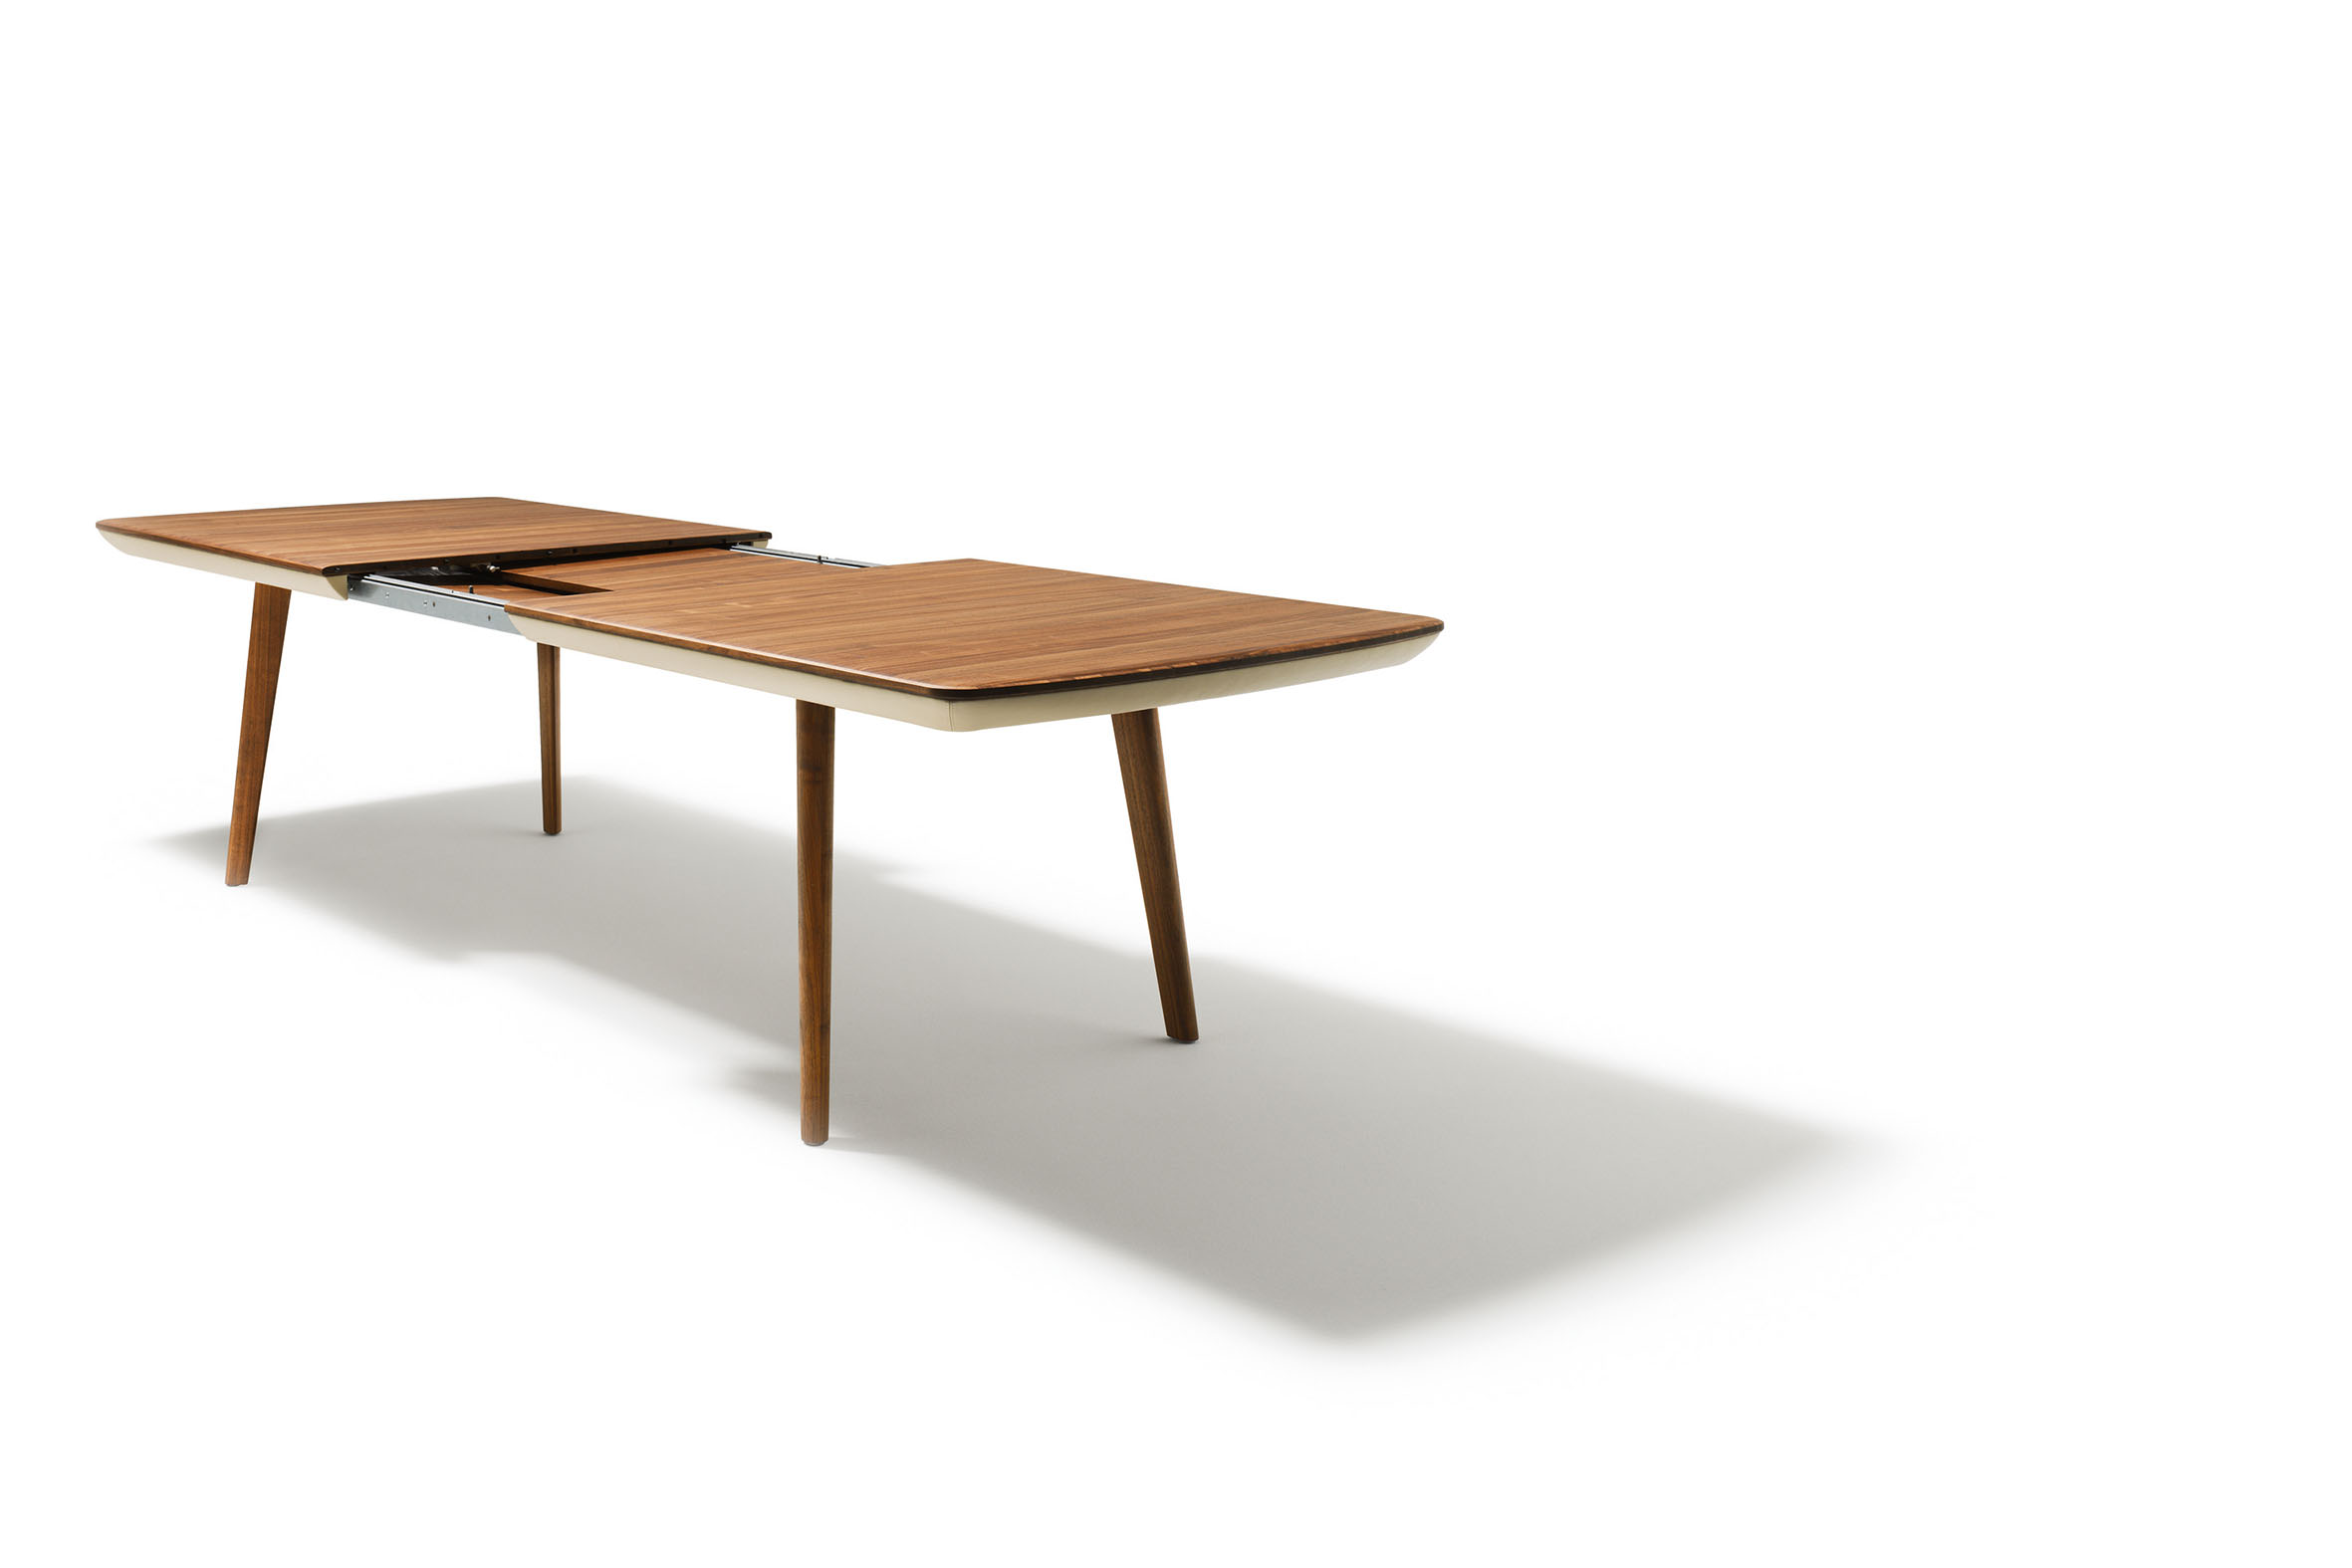 Team 7 tavoli allungabili: il legno naturale custodisce sofisticate tecnologie